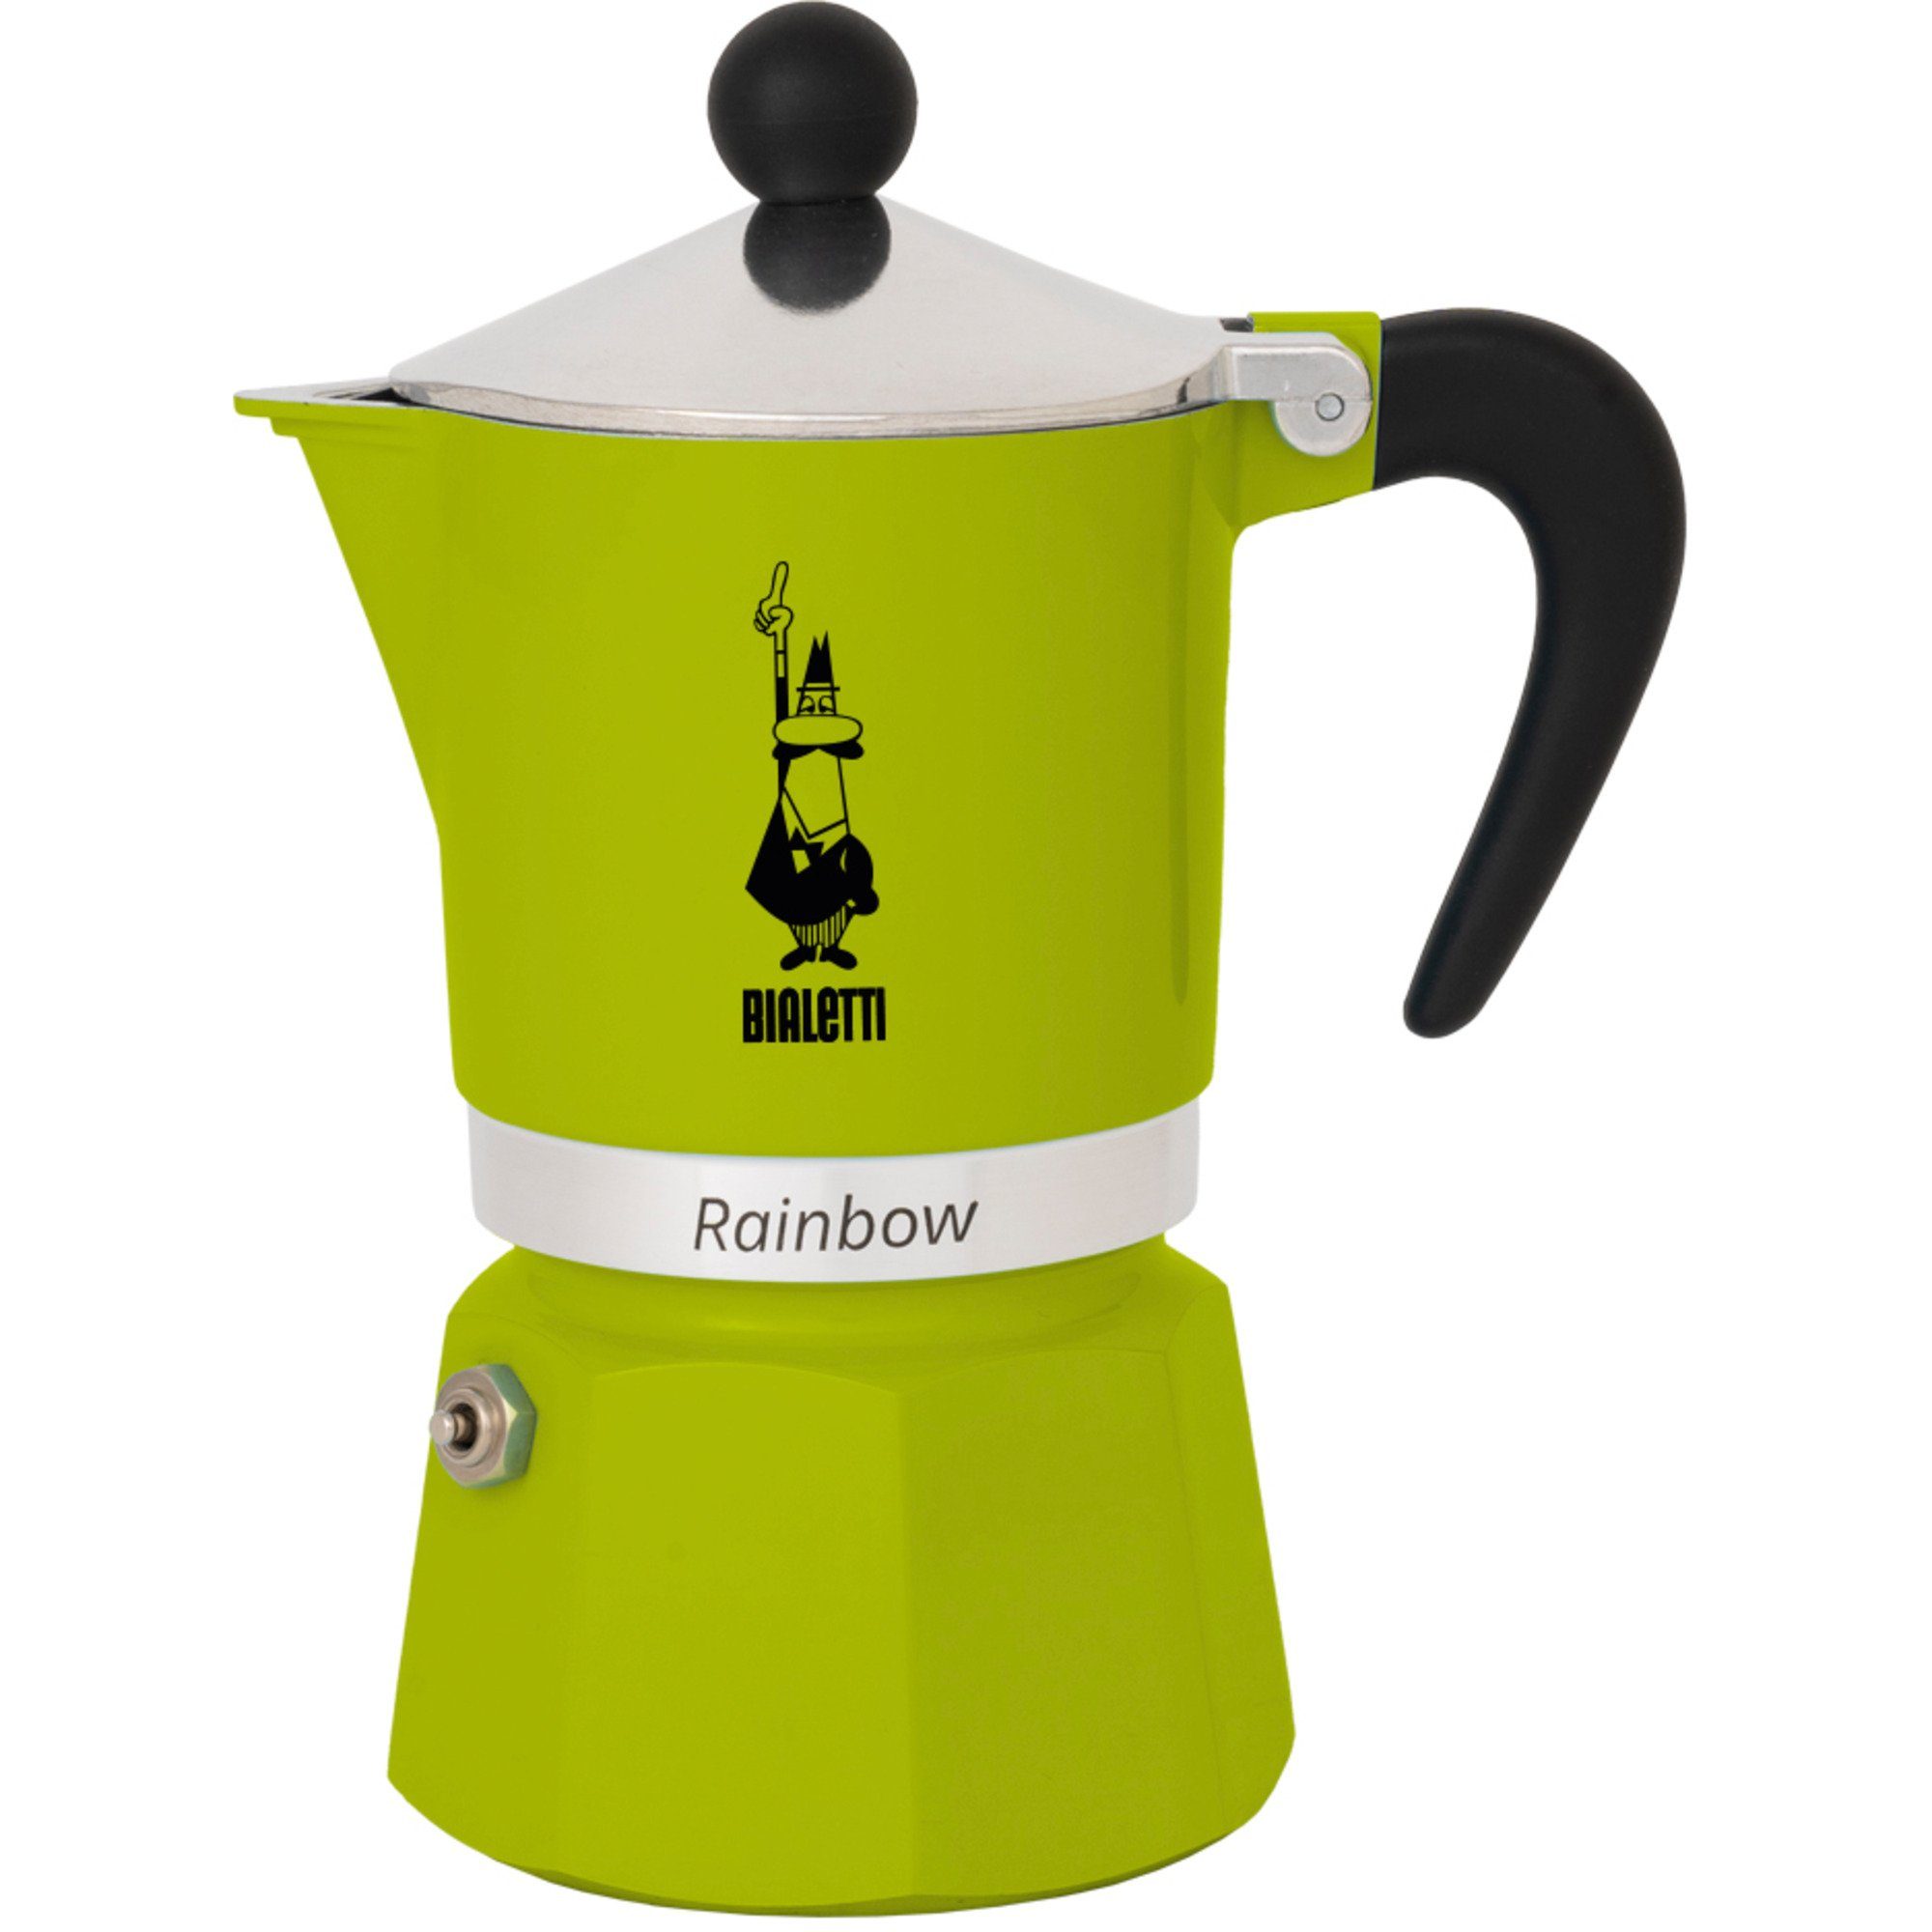 (1 BIALETTI Bialetti Espressomaschine, Kaffeebereiter Rainbow, Tasse)